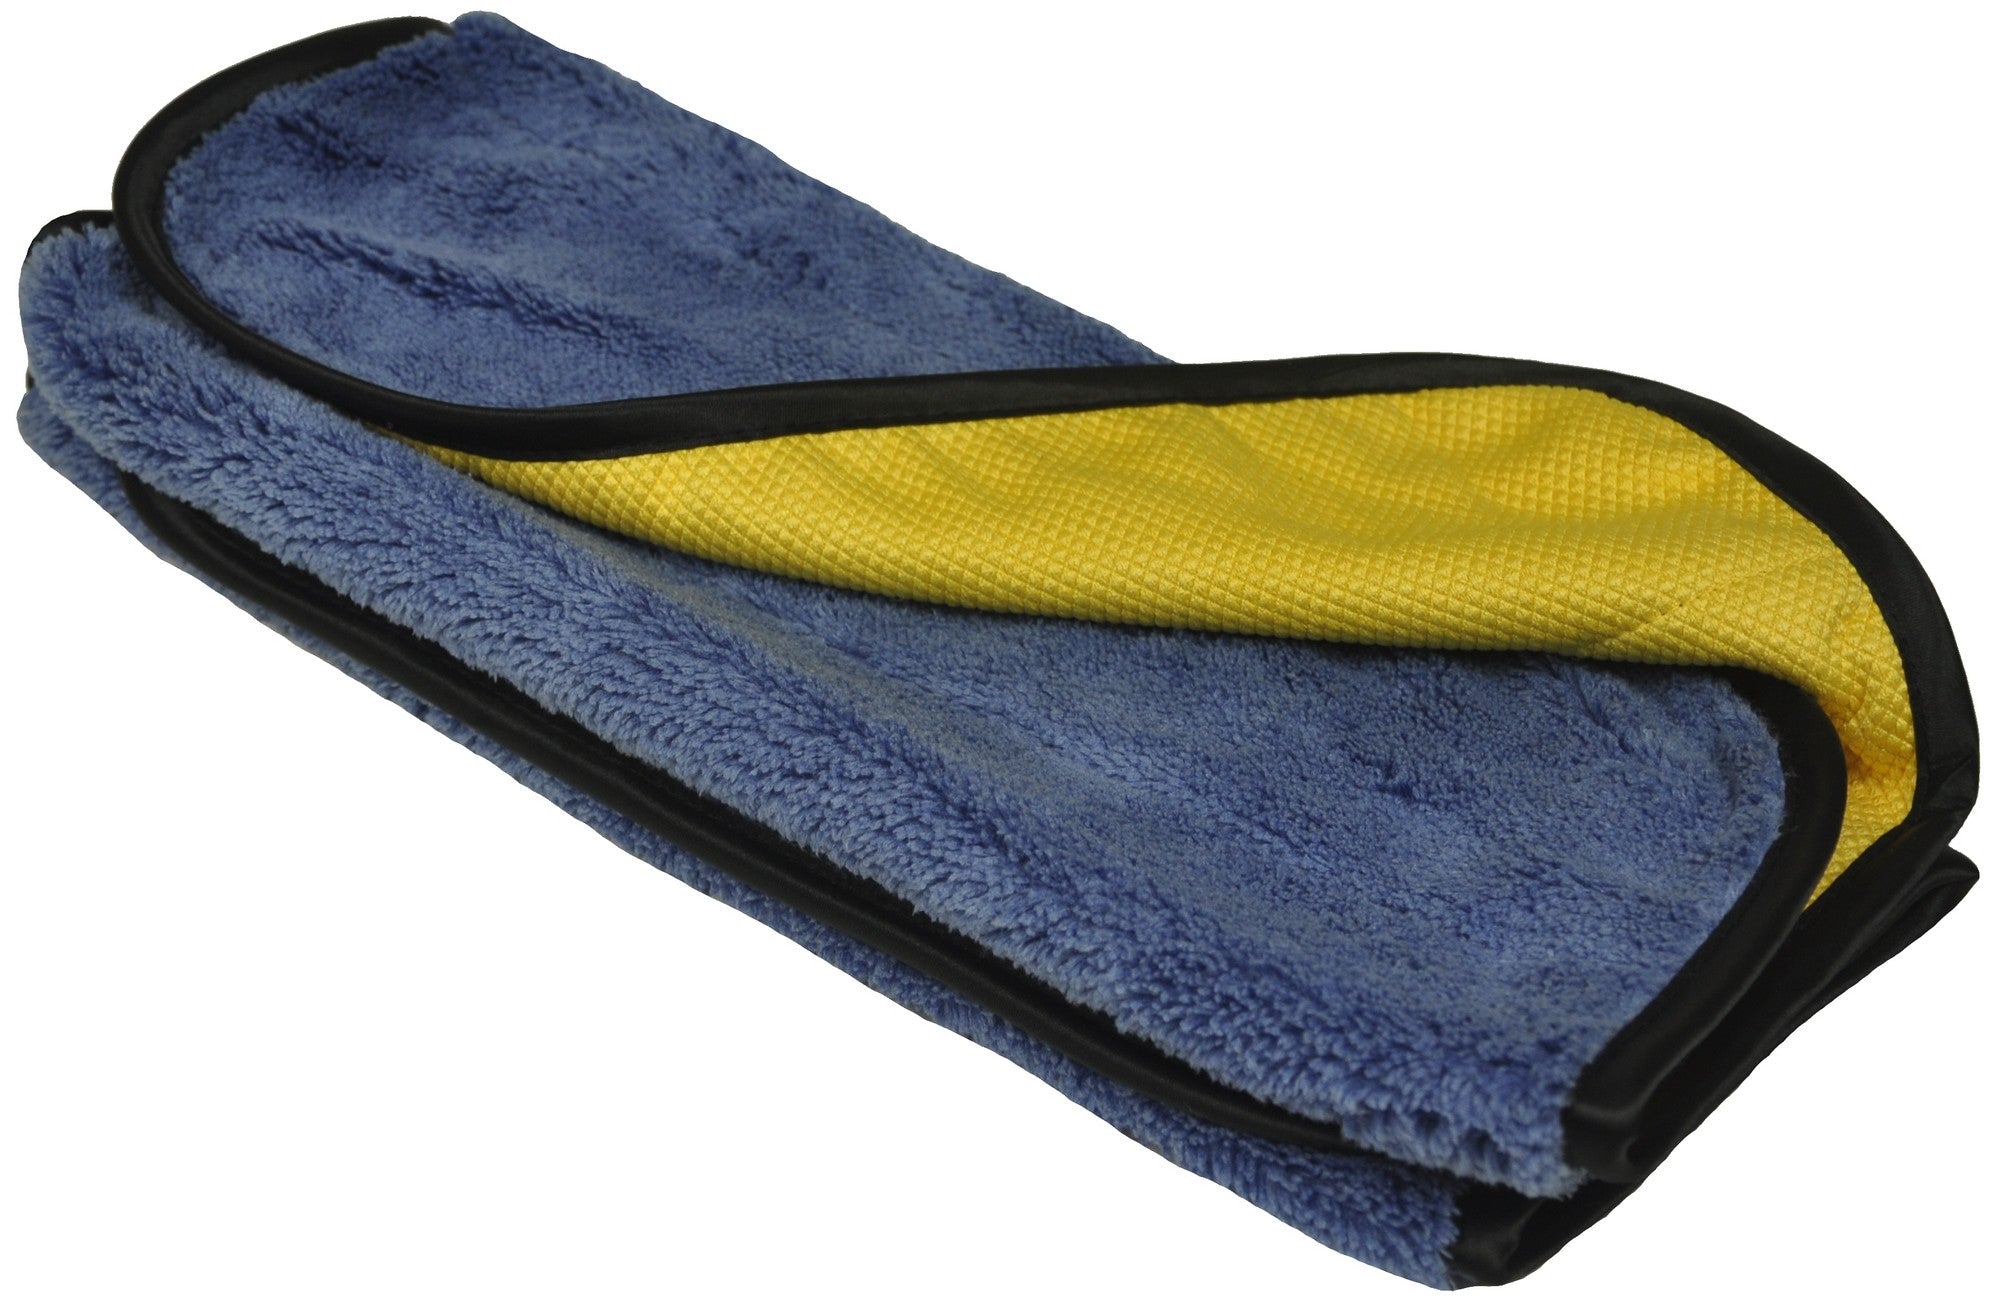 Polishing / Buffing 550gsm Edgeless Plush Microfibre Towel - Gliptone Europe